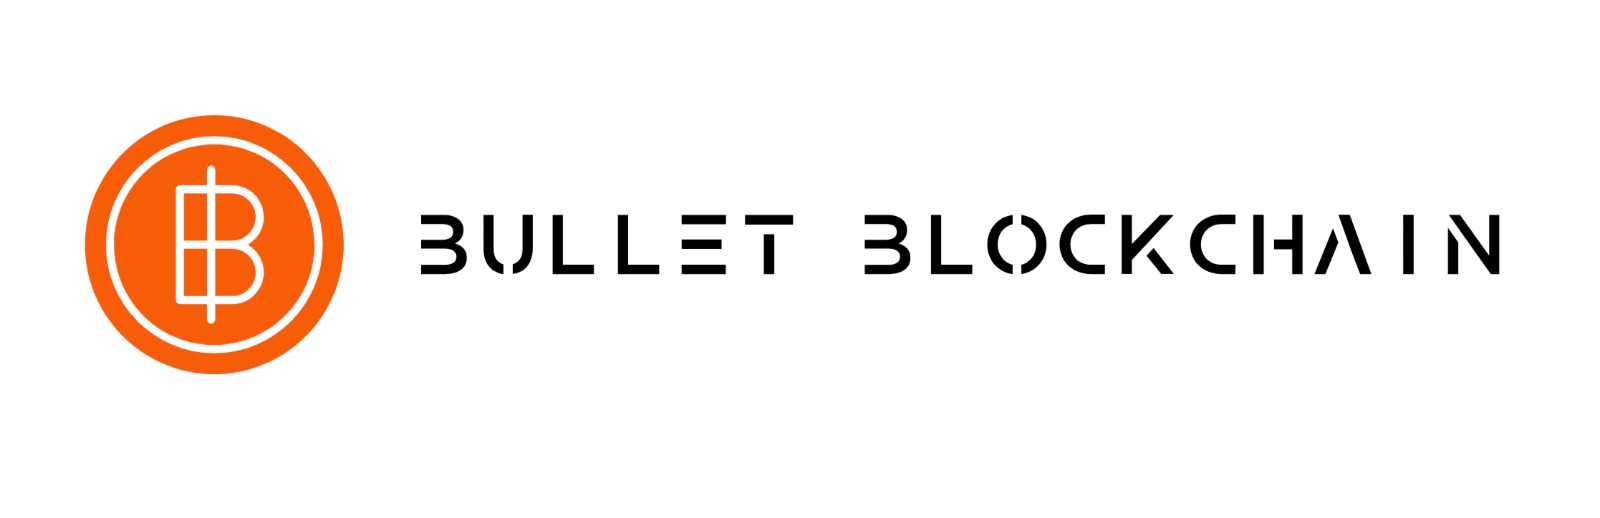 Bullet Blockchain, Inc.